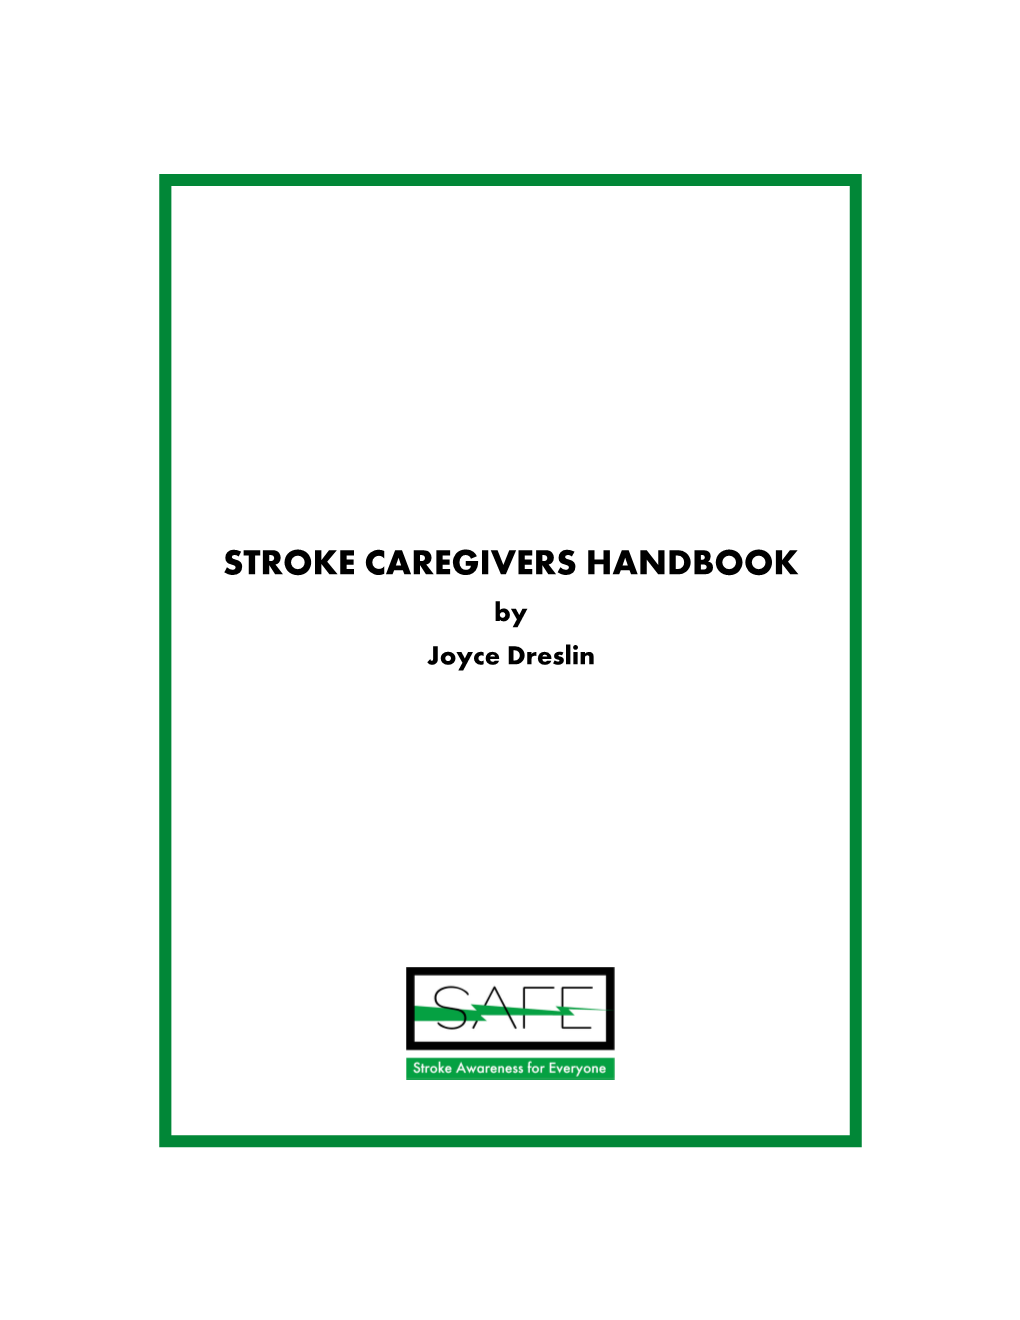 STROKE CAREGIVERS HANDBOOK by Joyce Dreslin STROKE CAREGIVERS HANDBOOK